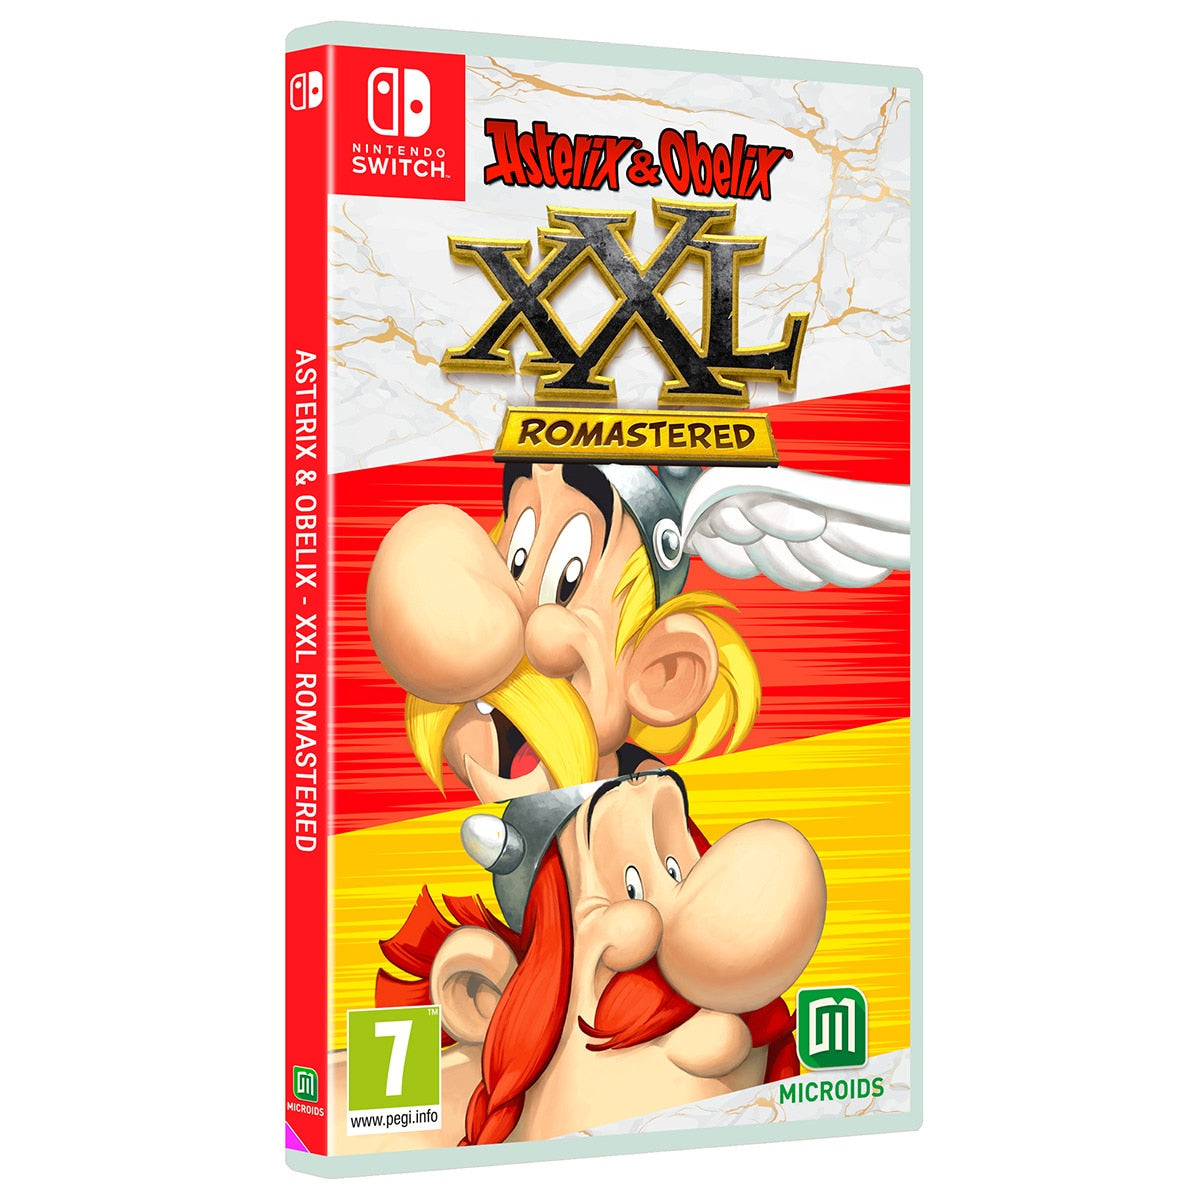 Switch Asterix & Obelix XXL Remastered - USADO